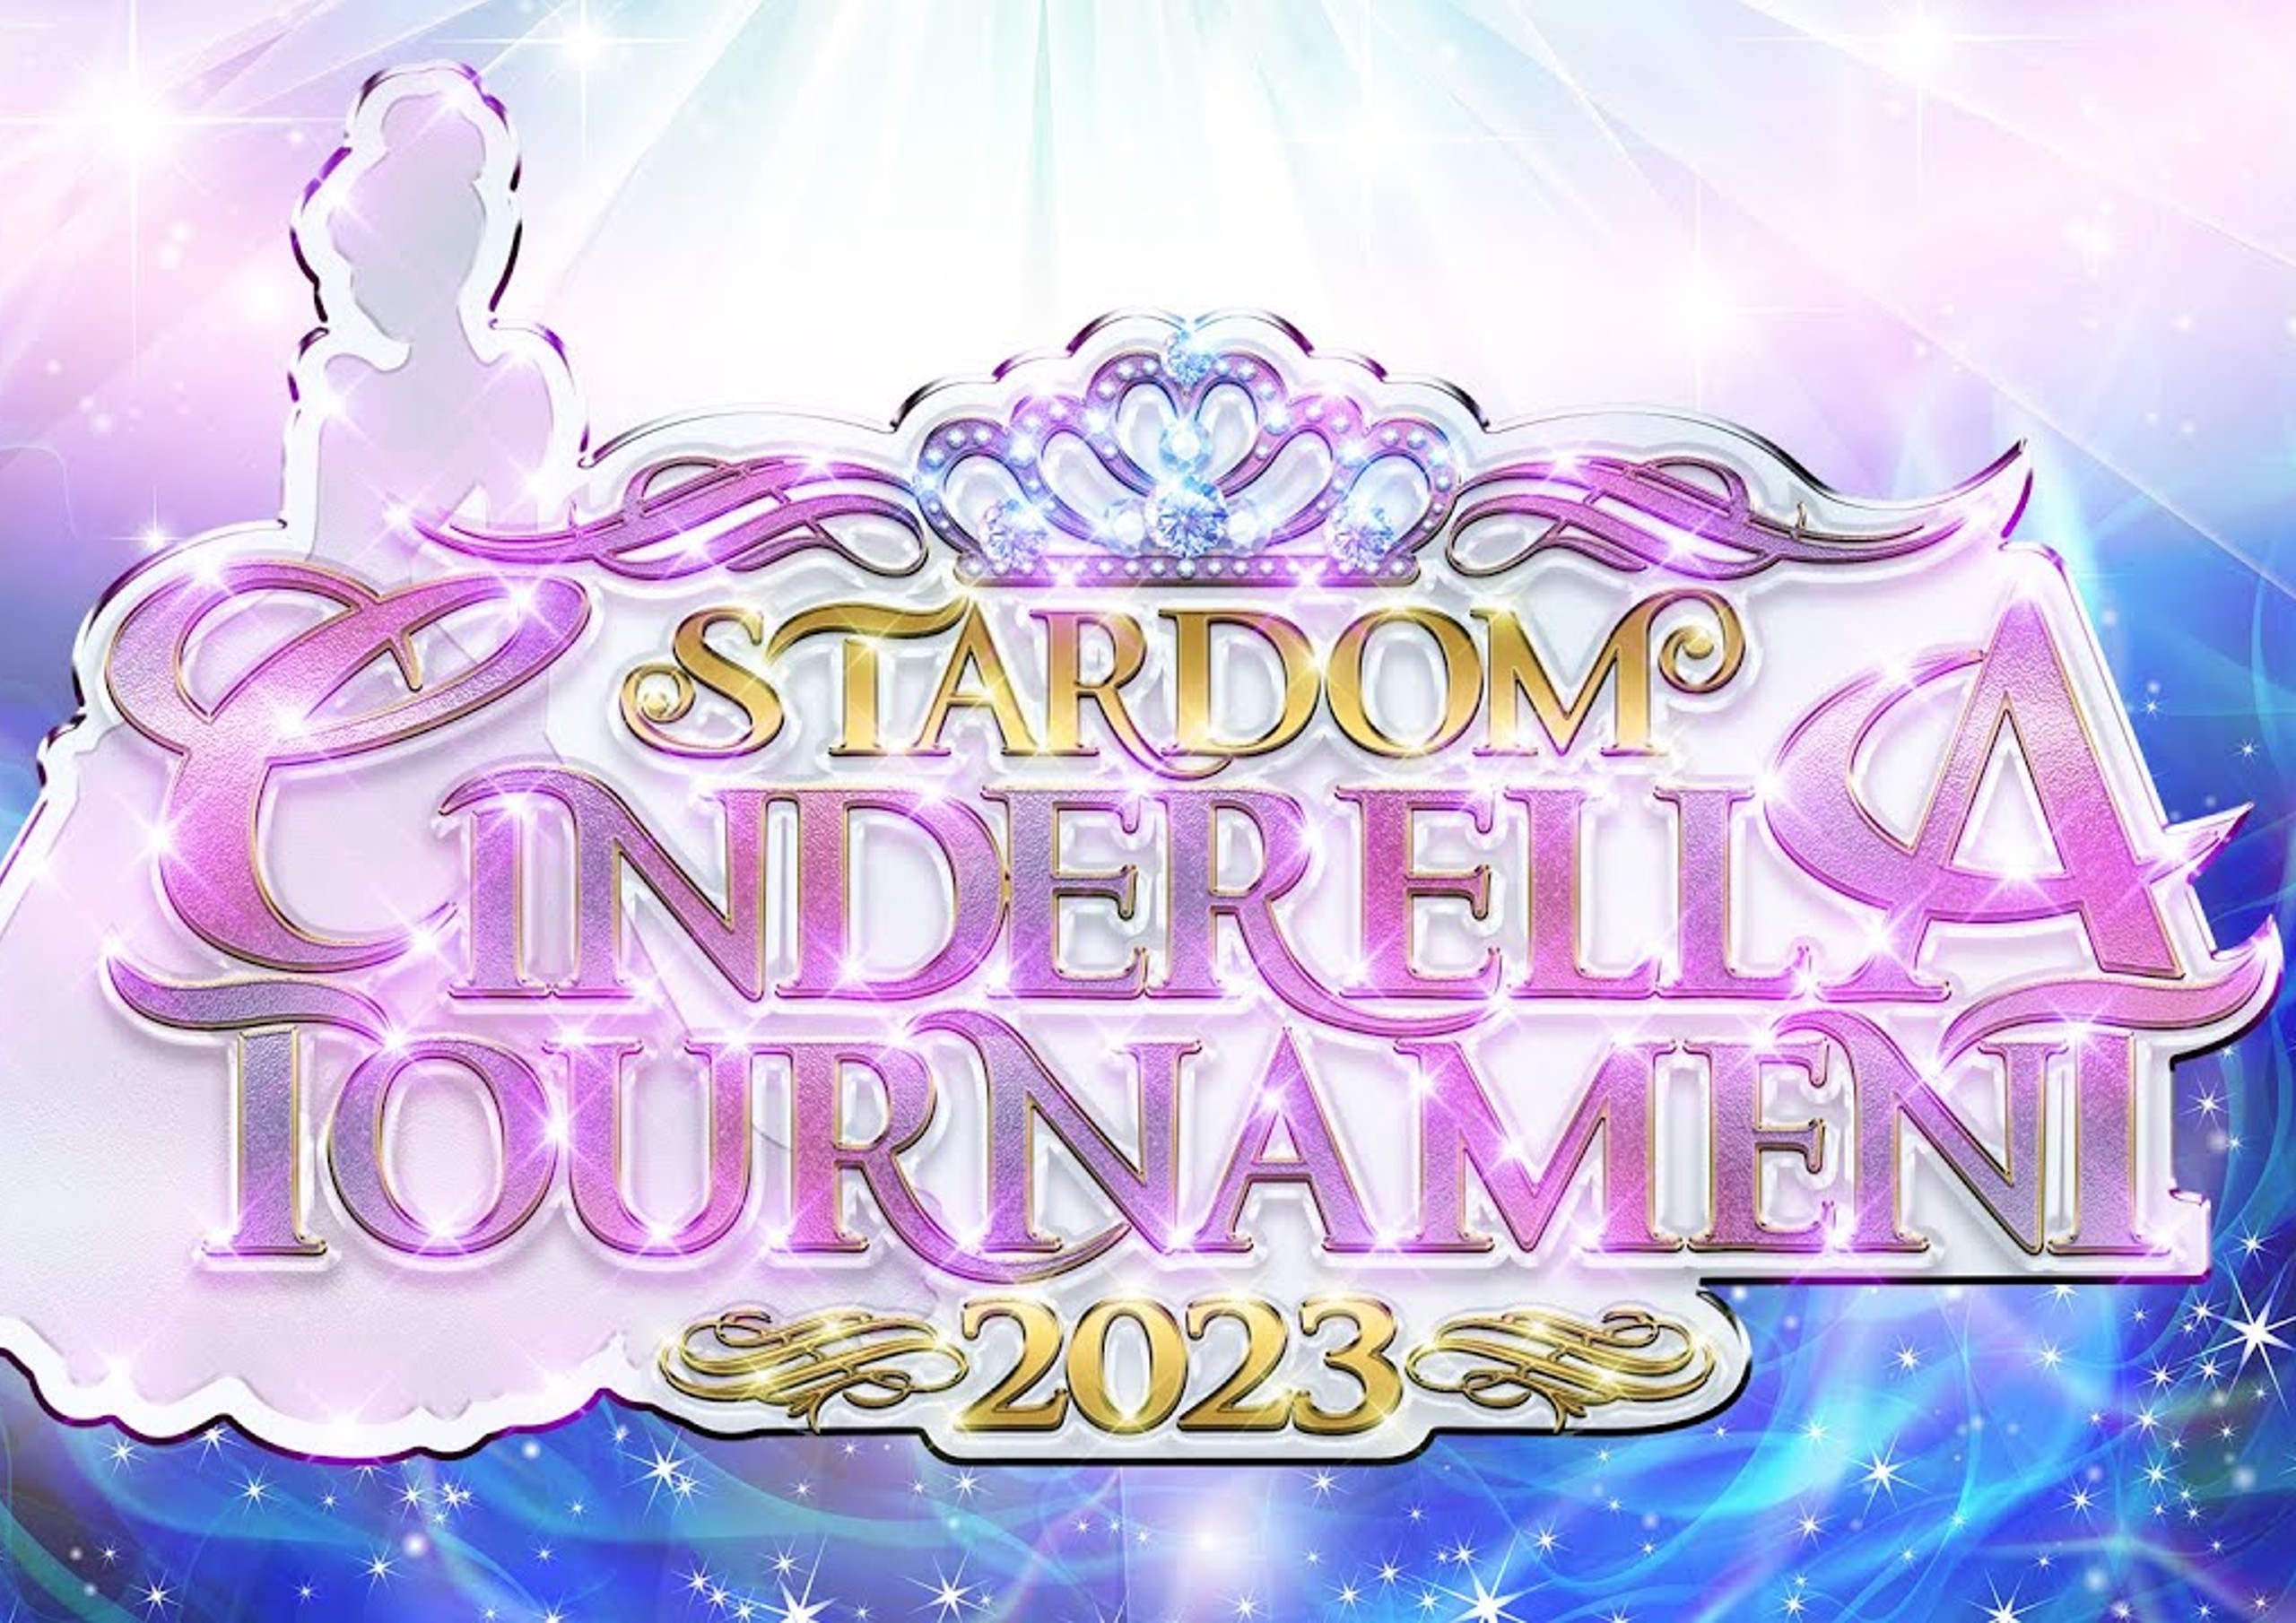 STARDOM Cinderella Tournament 2023 Opener Event Report